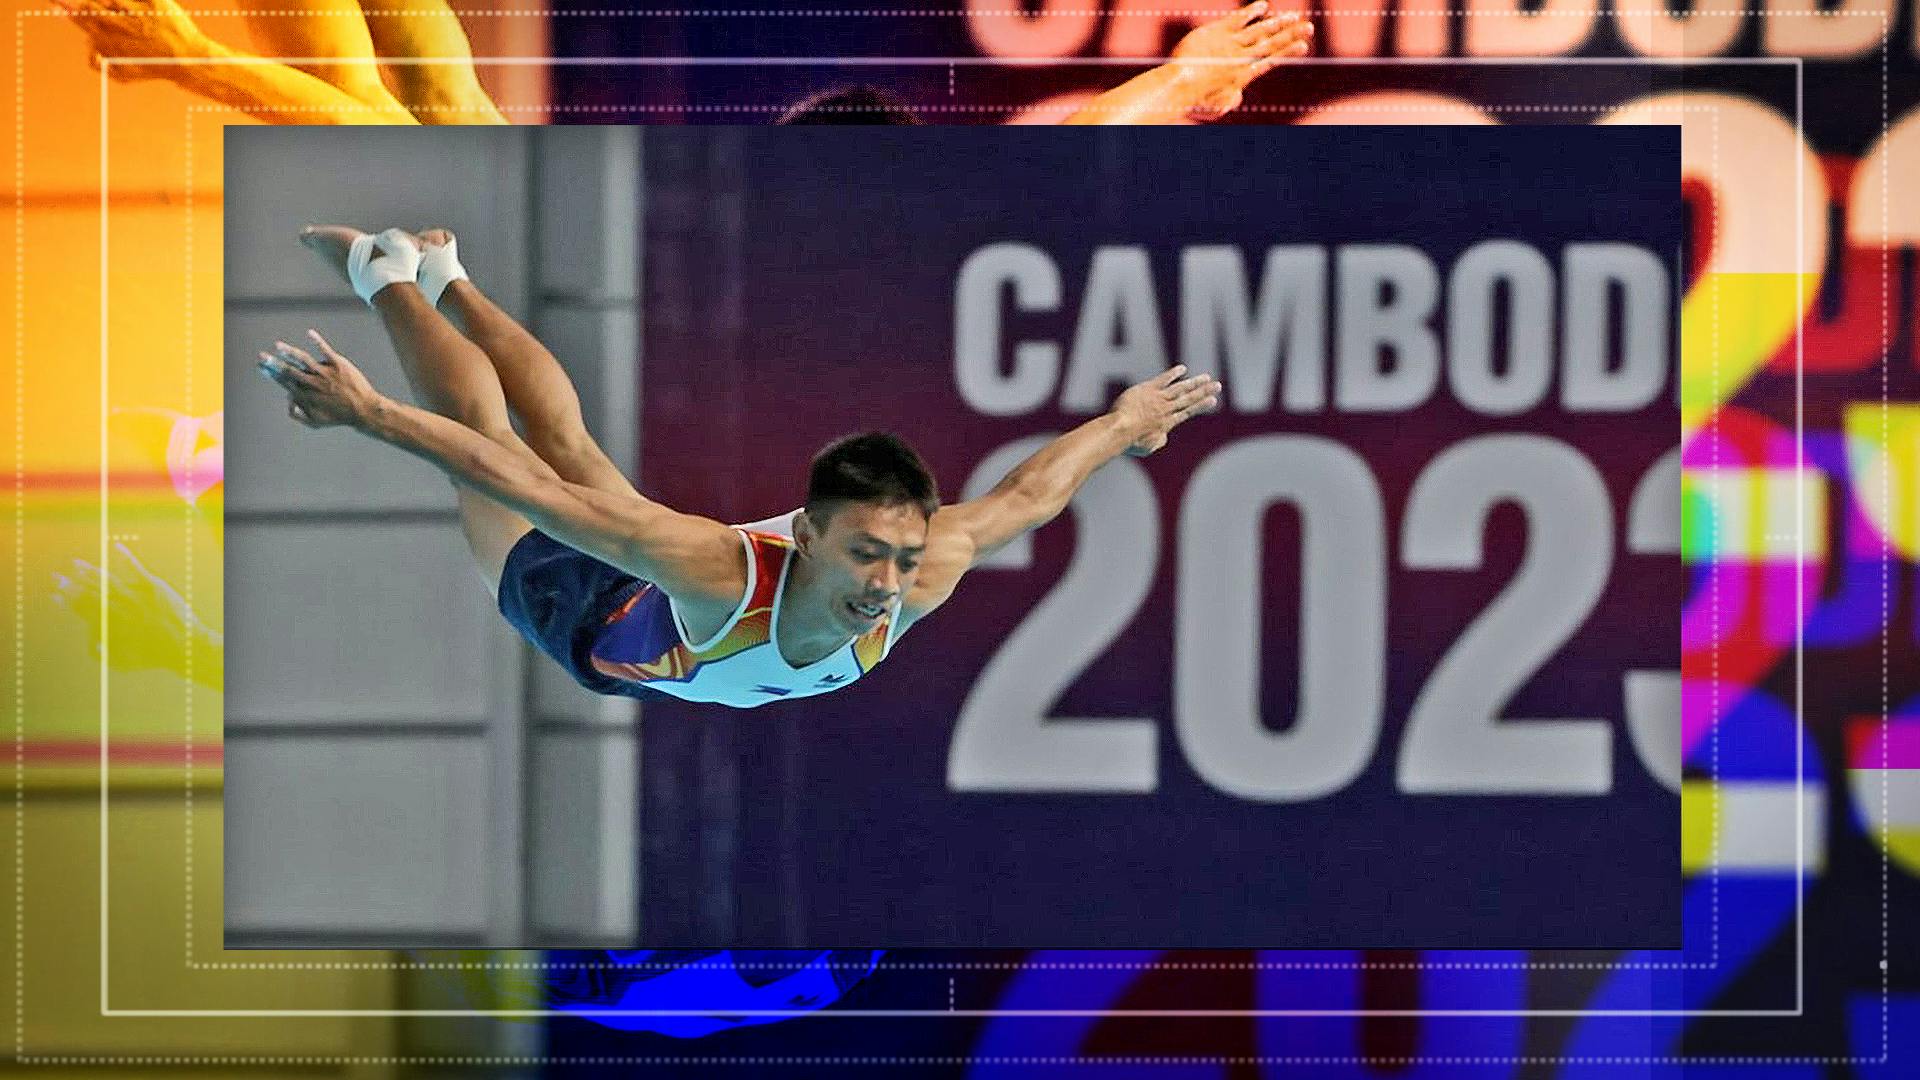 Tambay, utang, gold medal: Gymnast Ivan Cruz is the newest inspirational story